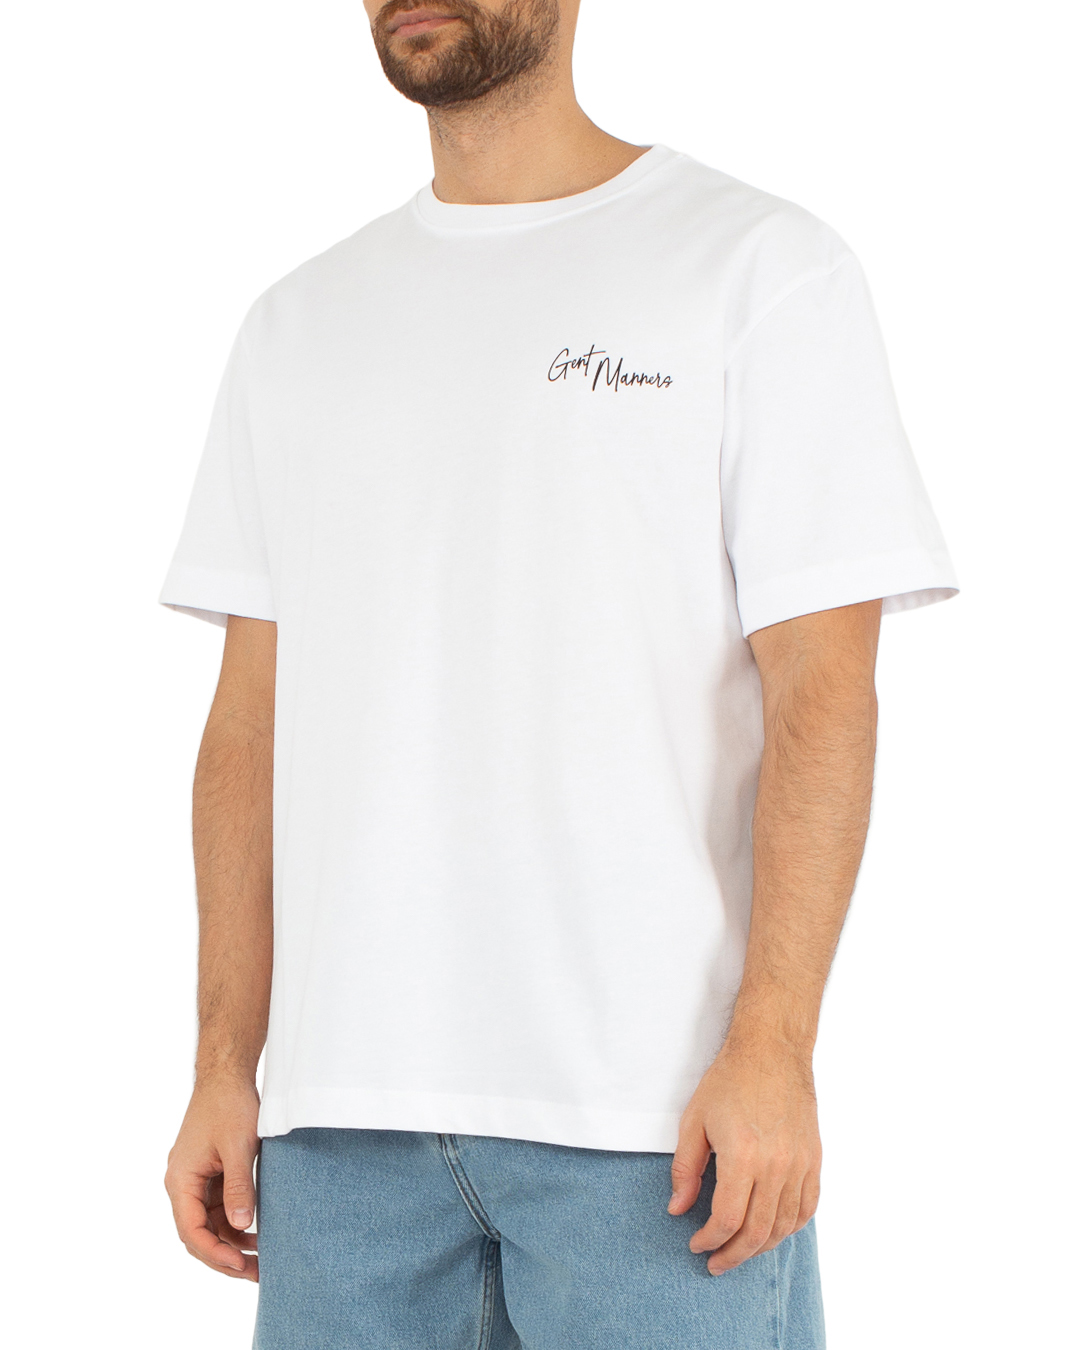 футболка Gent Manners 01_09T_WH белый 2xl, размер 2xl - фото 3